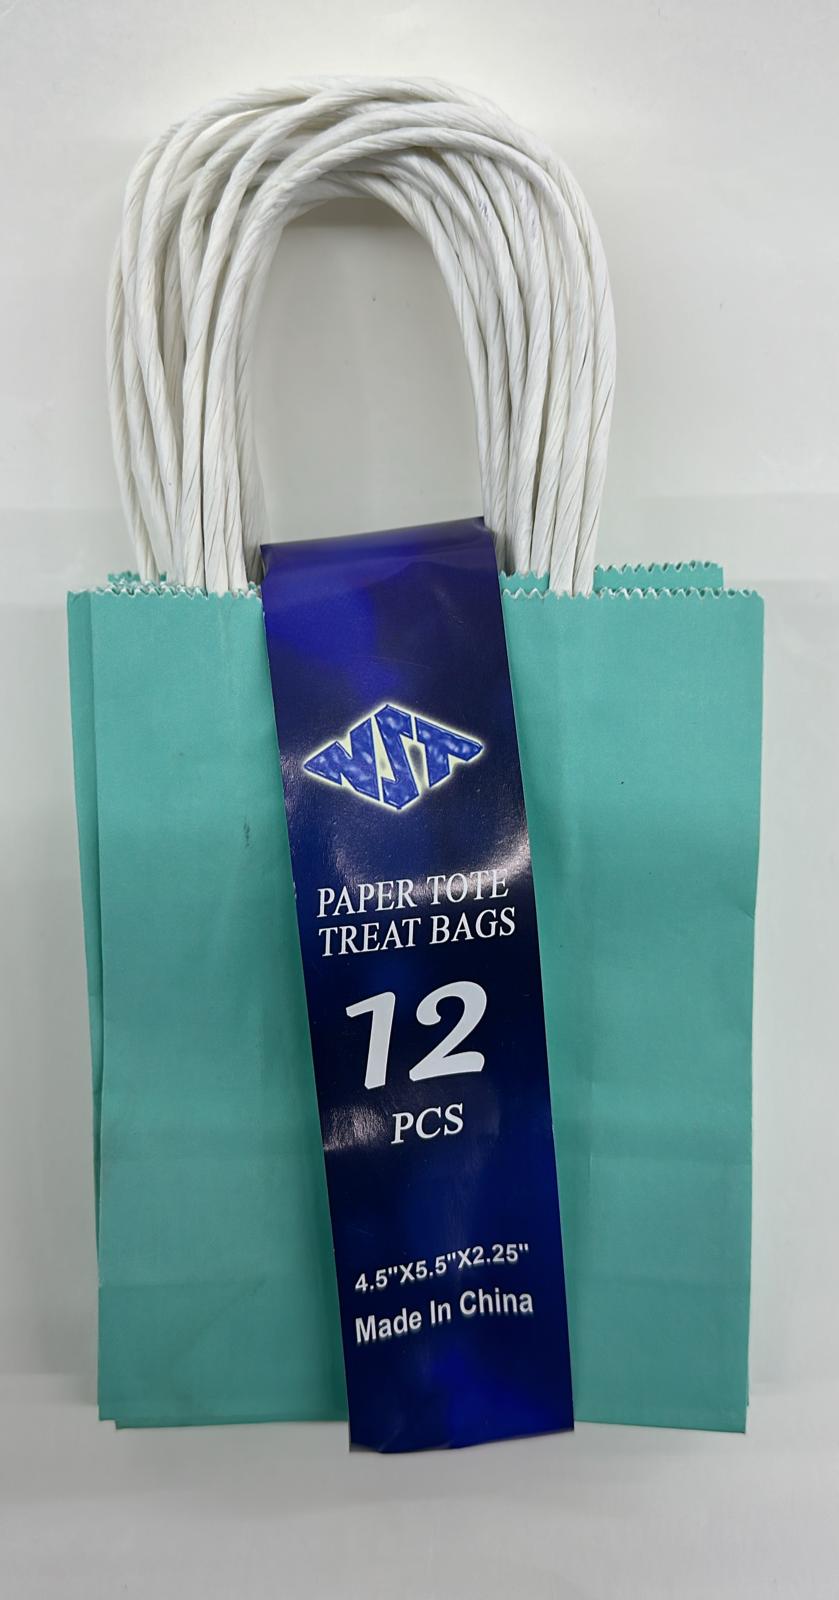 Paper Tote Treat Bags(4.5"x5.5"x2.25")(12pcs)